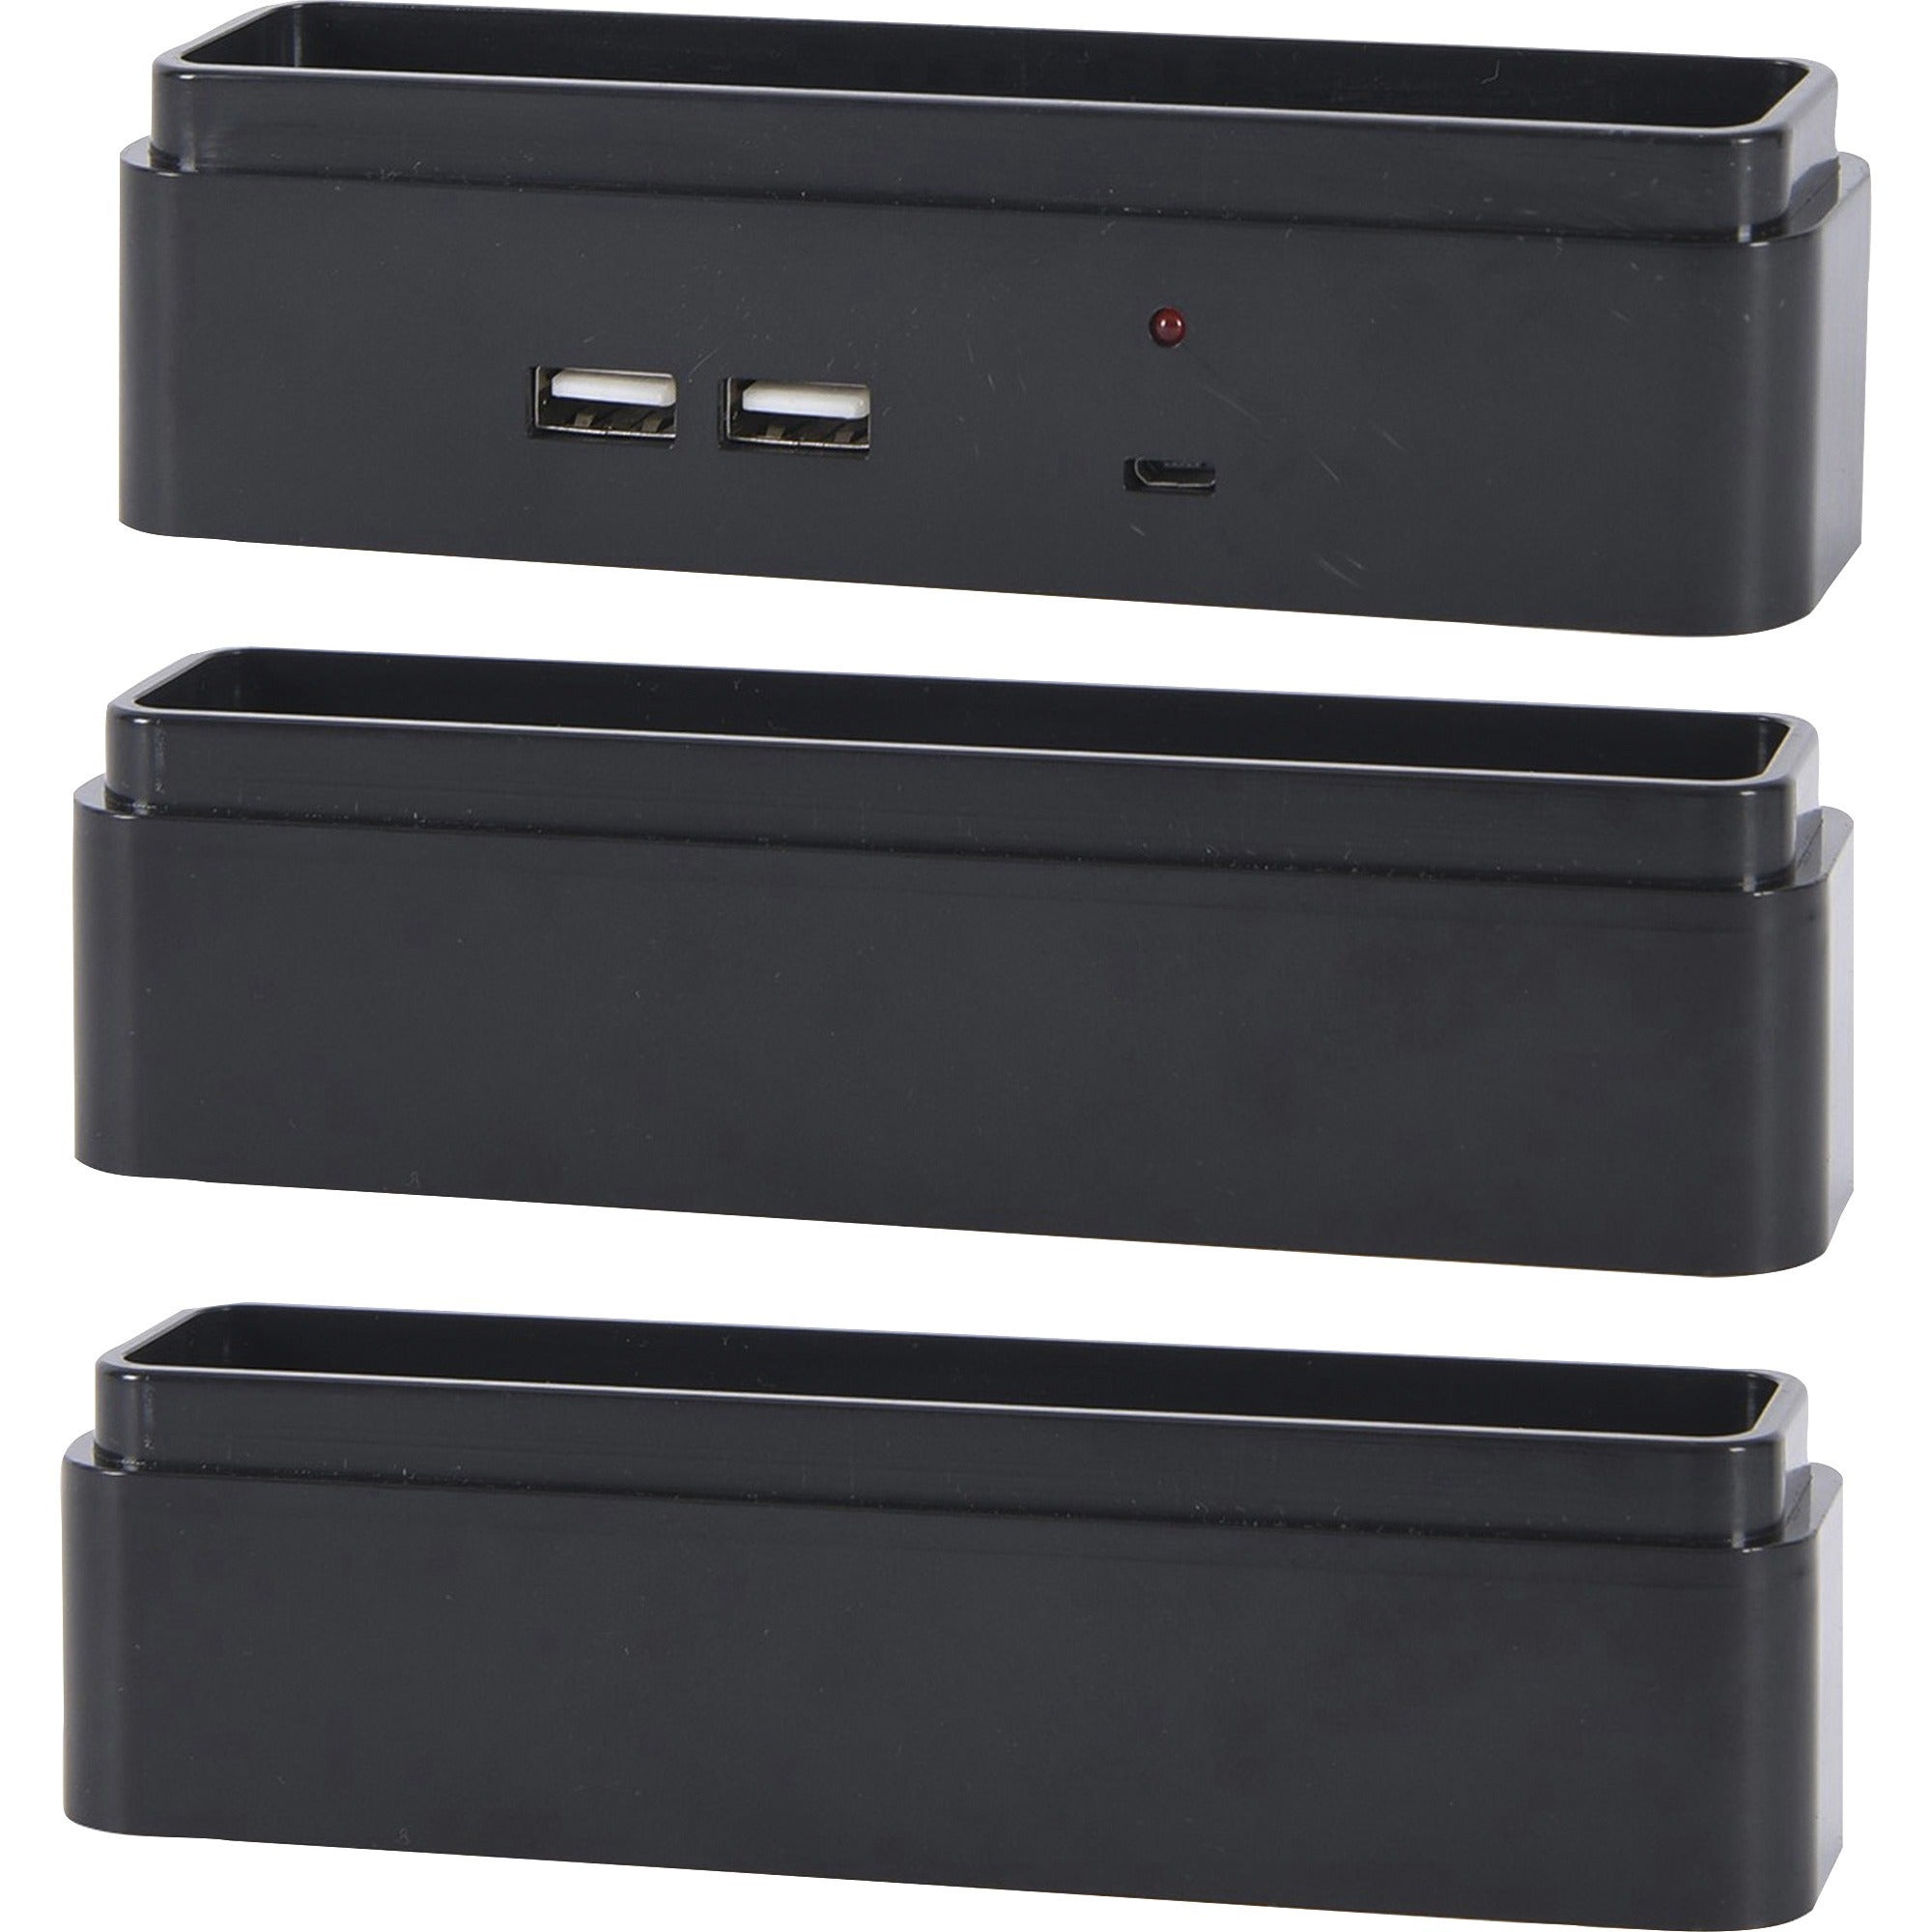 dac-stax-monitor-riser-block-kit-with-2-usb-charging-ports-6-length-x-15-width-x-15-height-black_dta02270 - 1